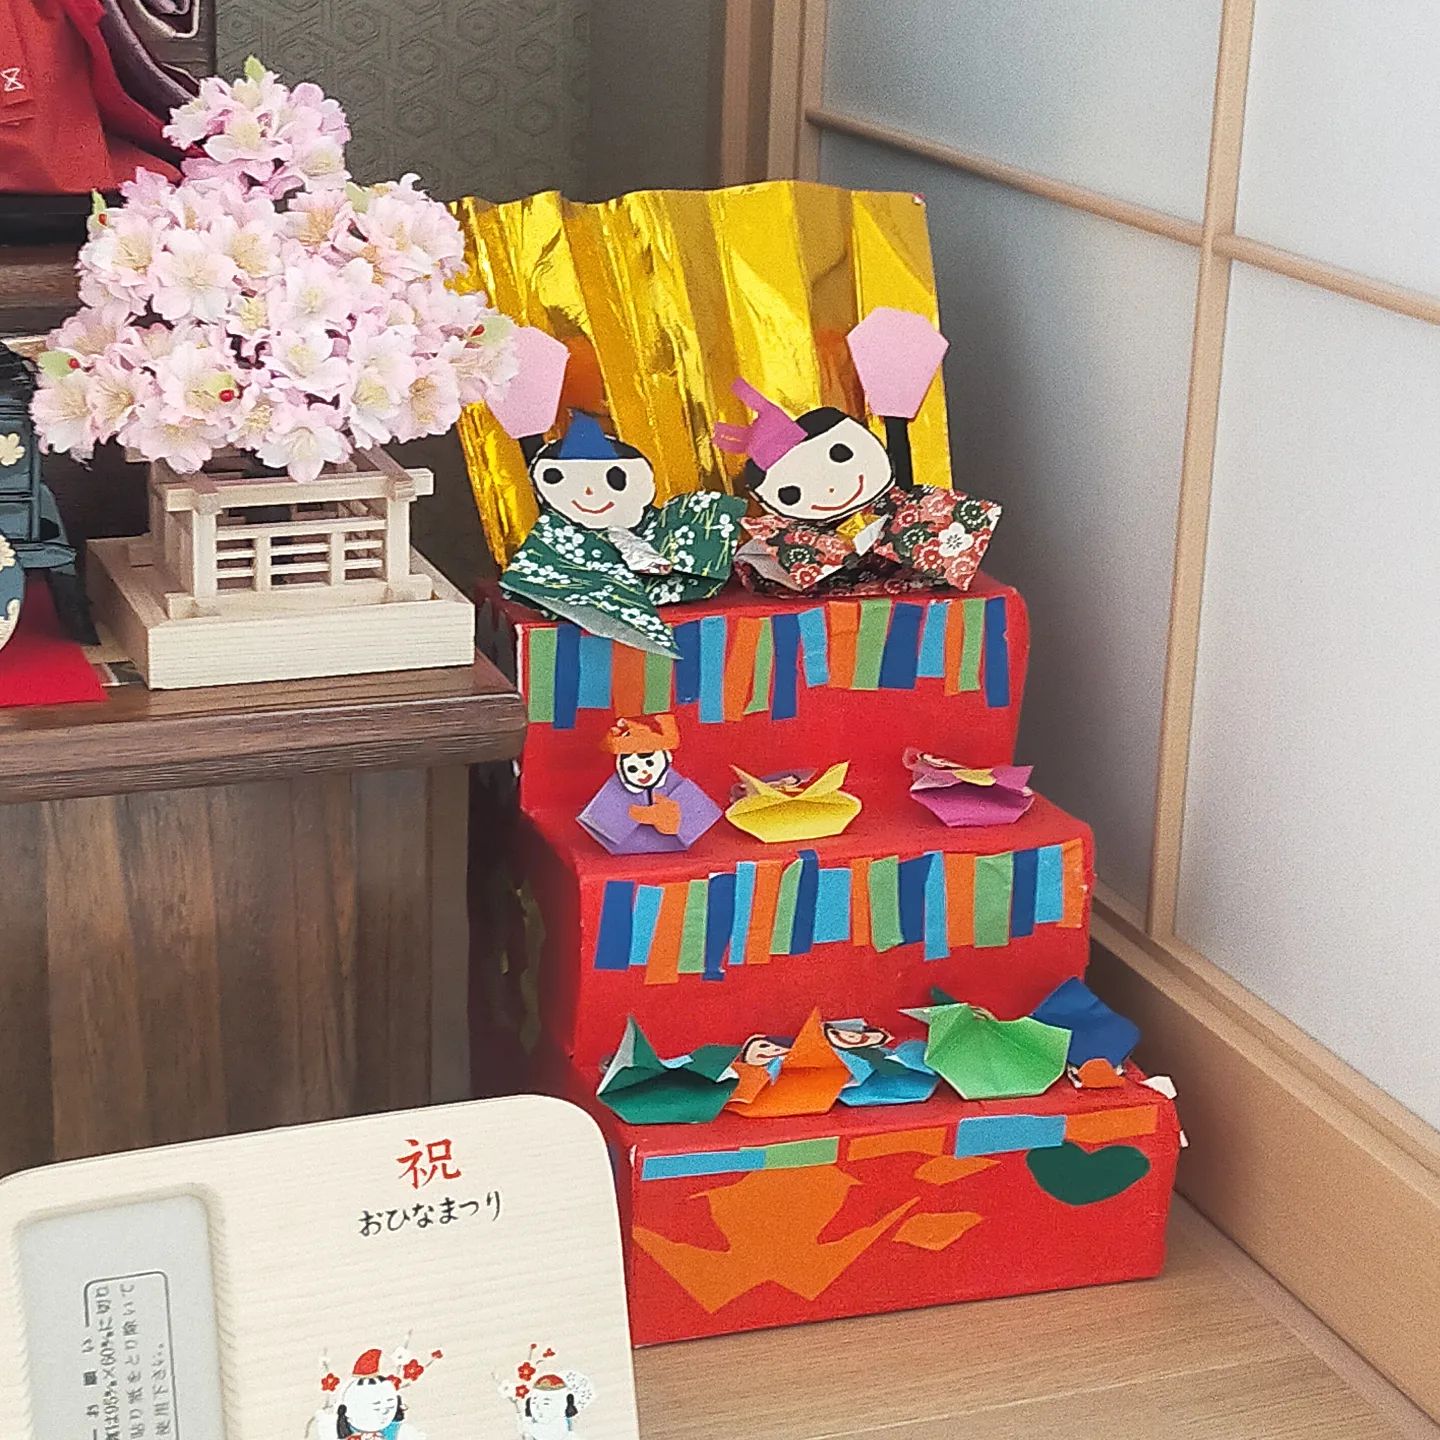 TOYOTA自動車で有名な豊田市に雛人形の飾り付け、配達いたしました- from Instagram